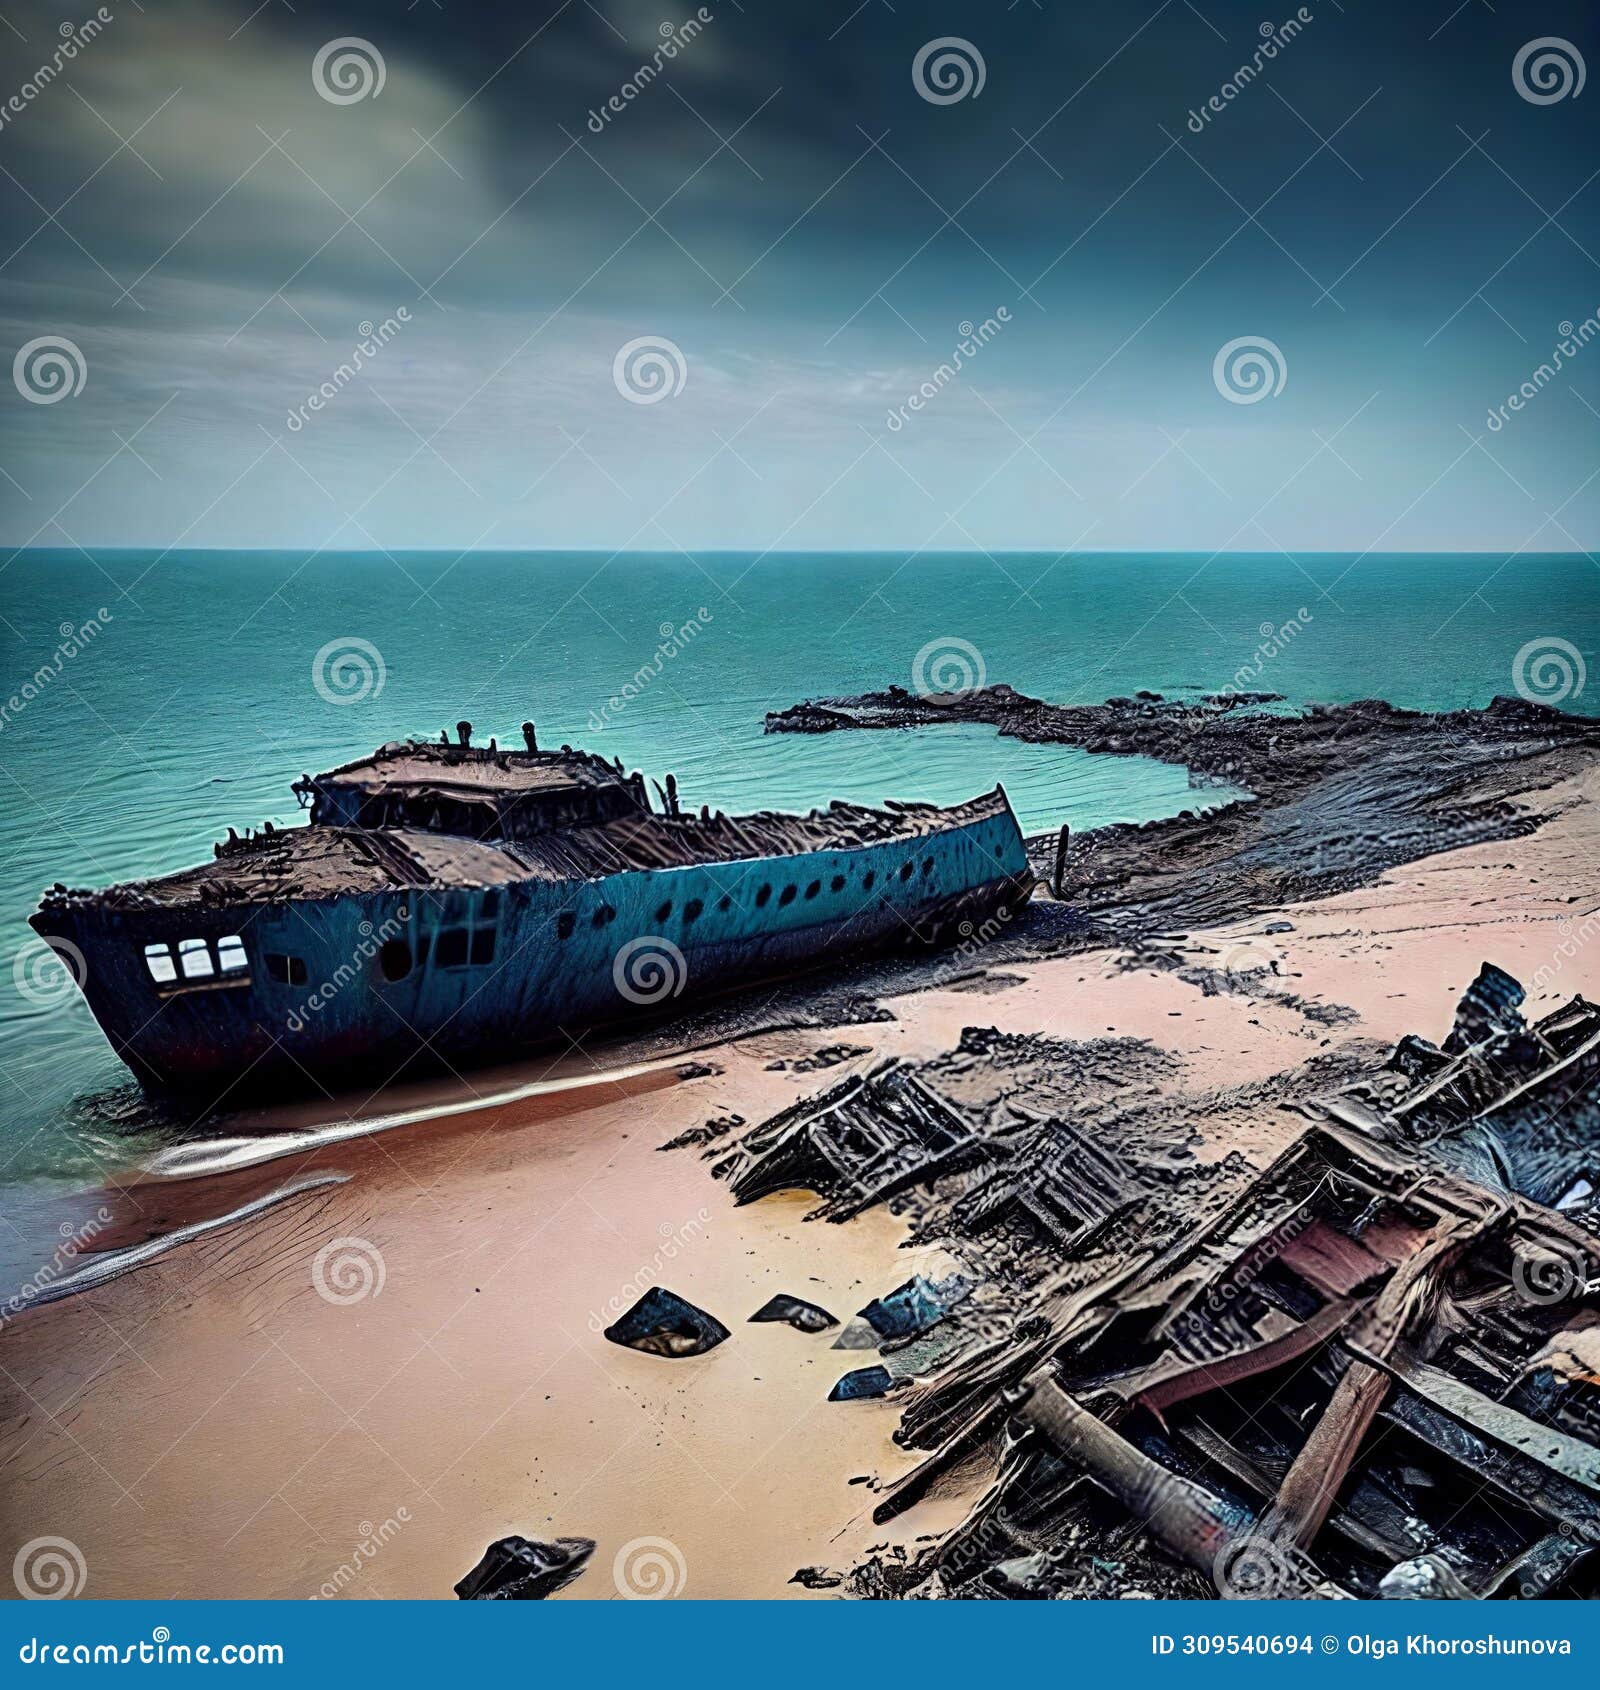 shipwrecked world. post-apocalyptic coastal scene with sunken ships, washed-up debris